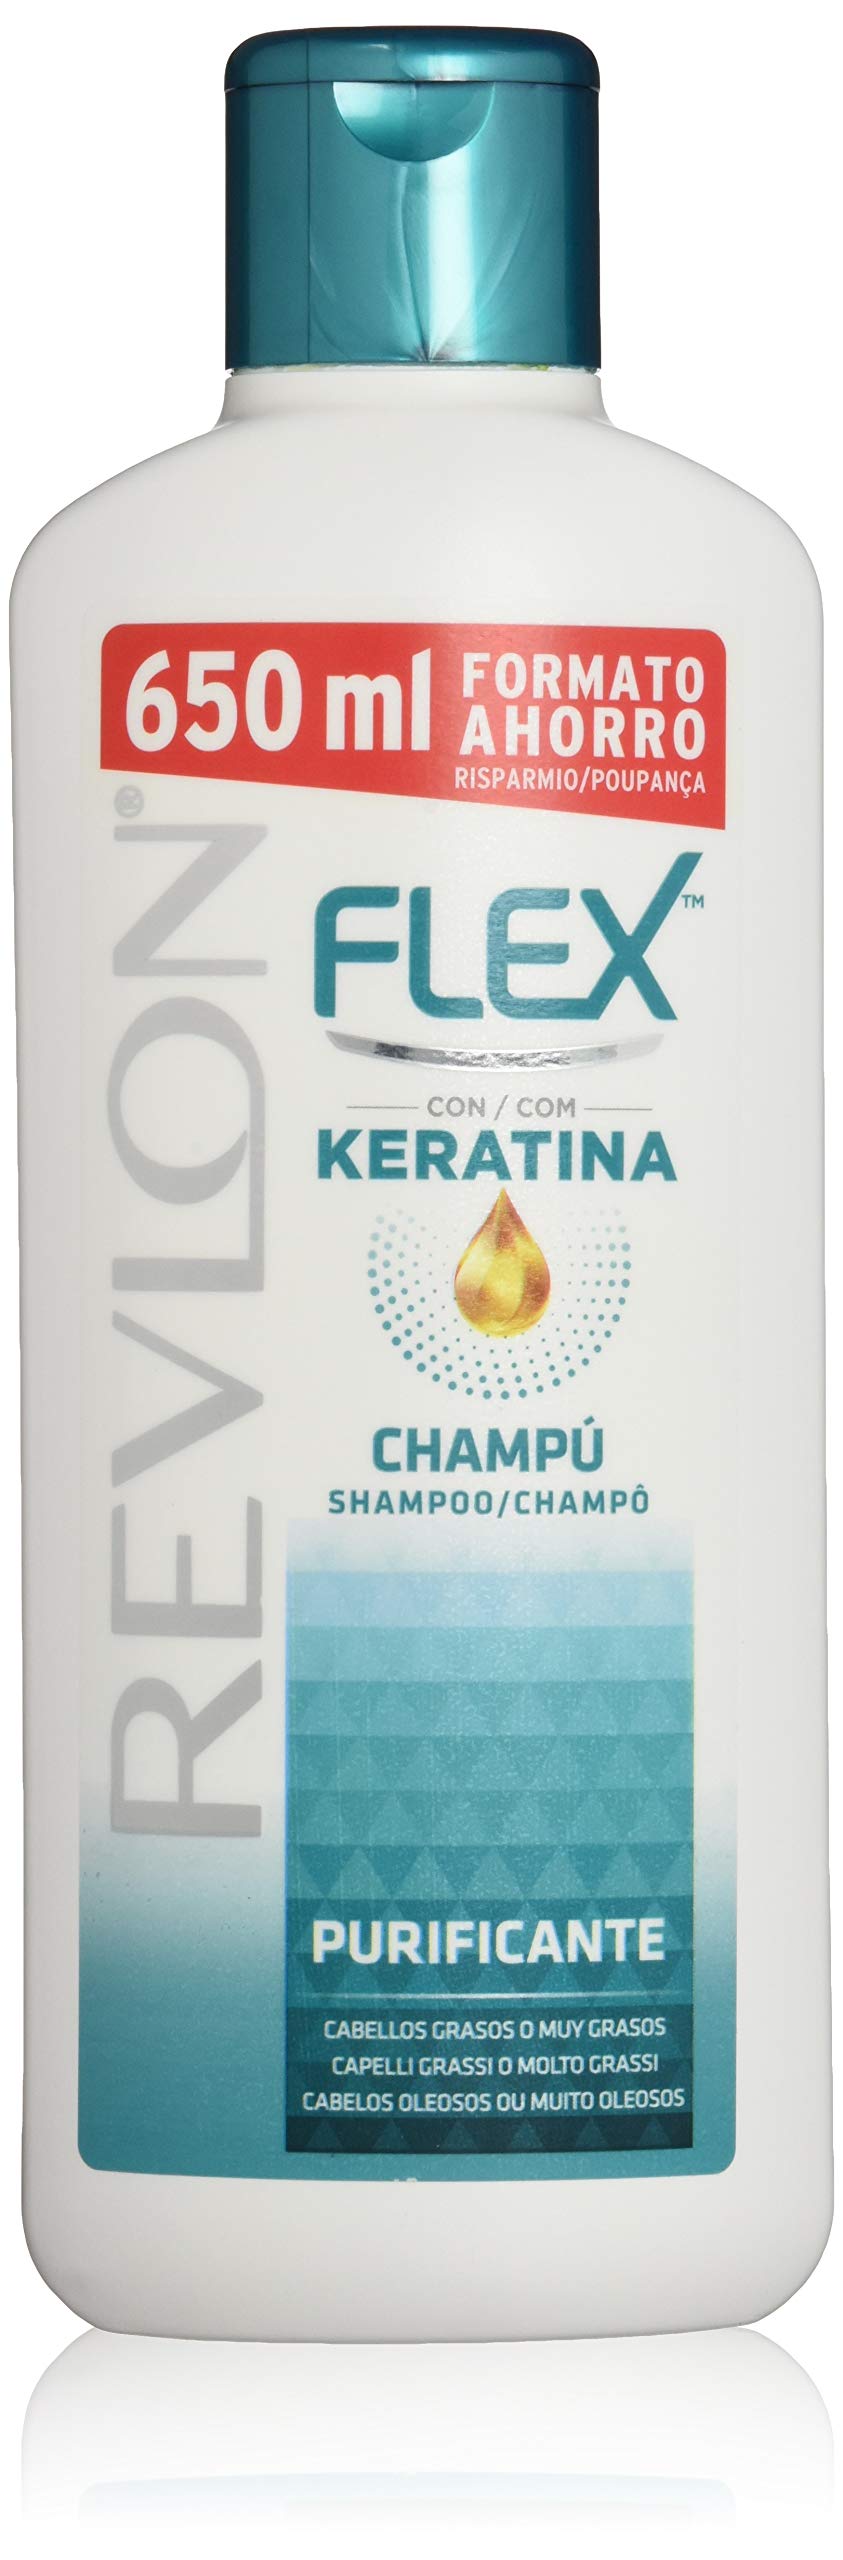 REVLON MASS MARKET  Flex Keratin Purifying Oily Hair Shampoo 650 ml